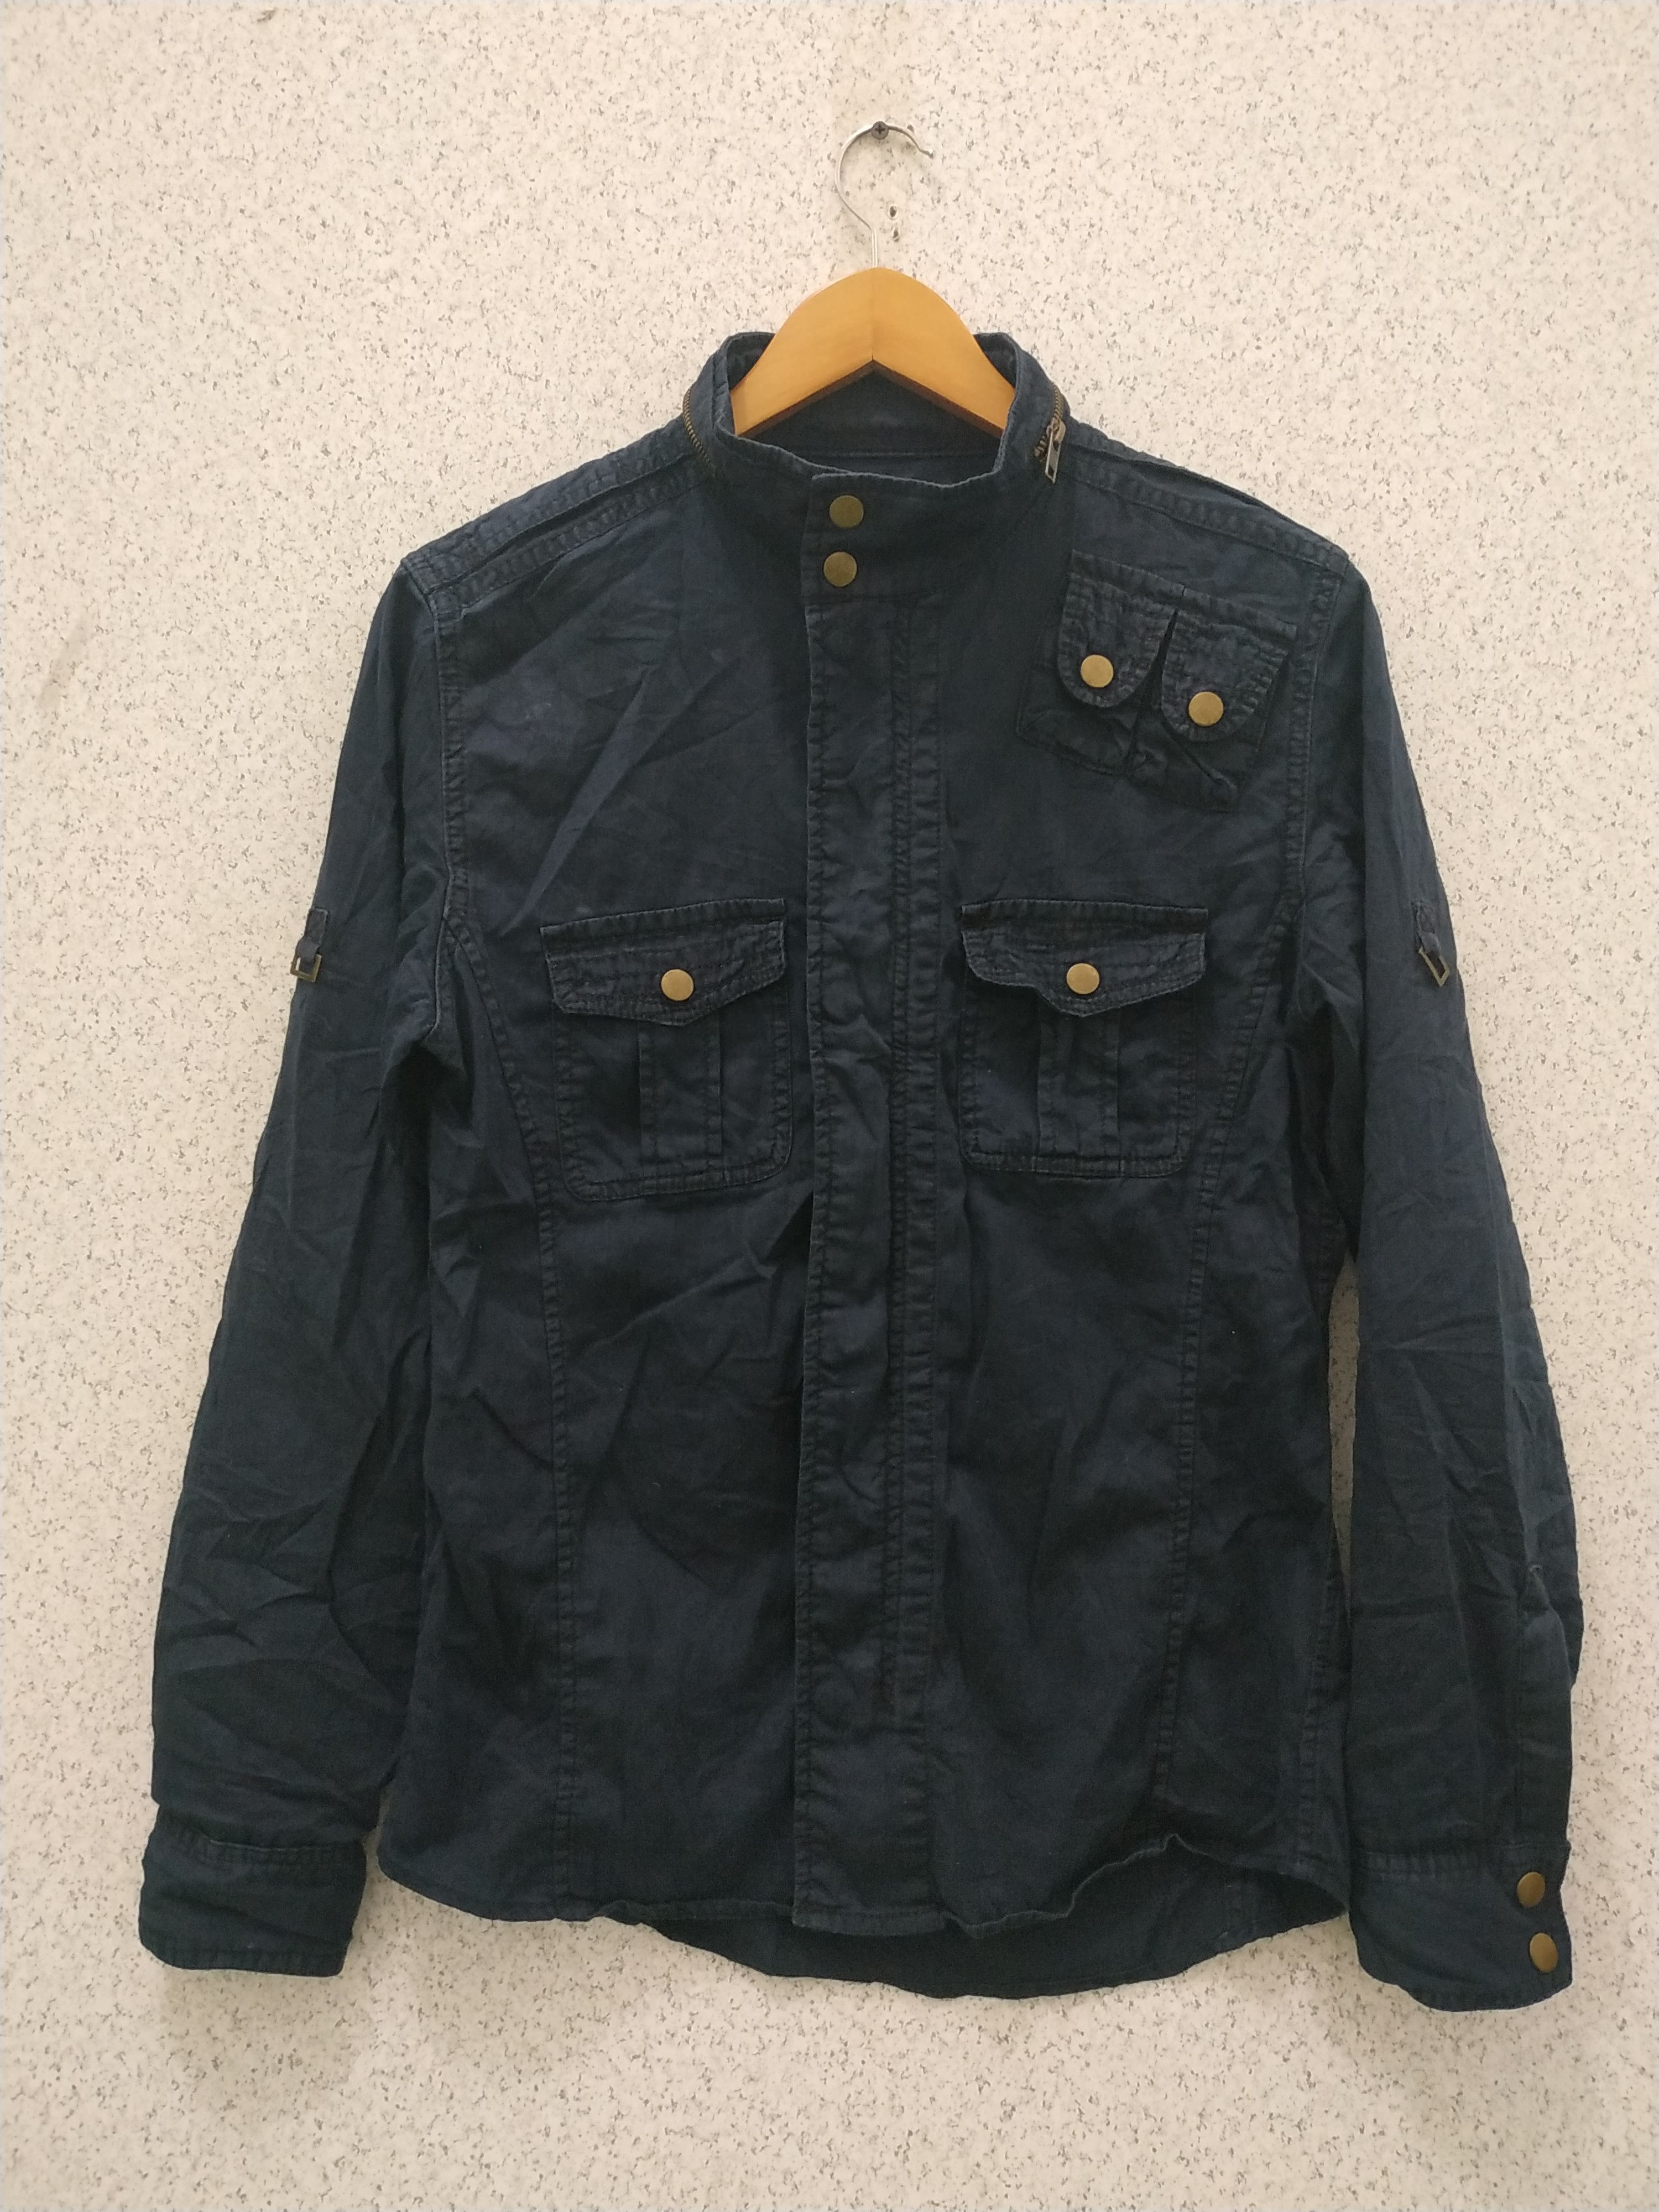 Japanese Brand 291295 Homme Jacket | Grailed